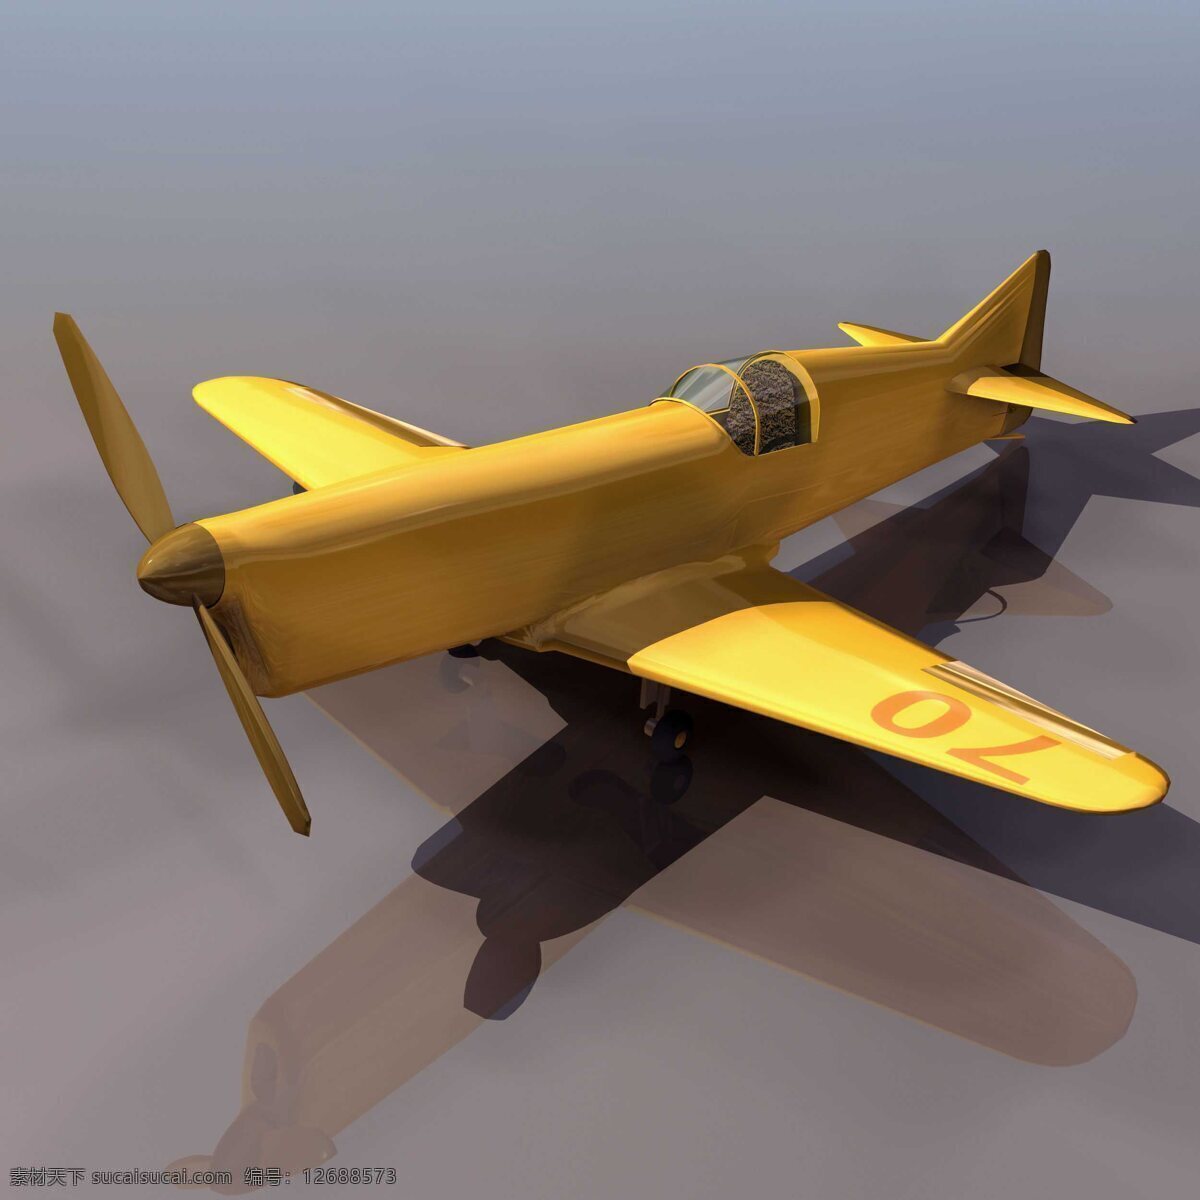 airplane racing speed schoendfelt 军事模型 firecracker 空军武器库 3d模型素材 其他3d模型